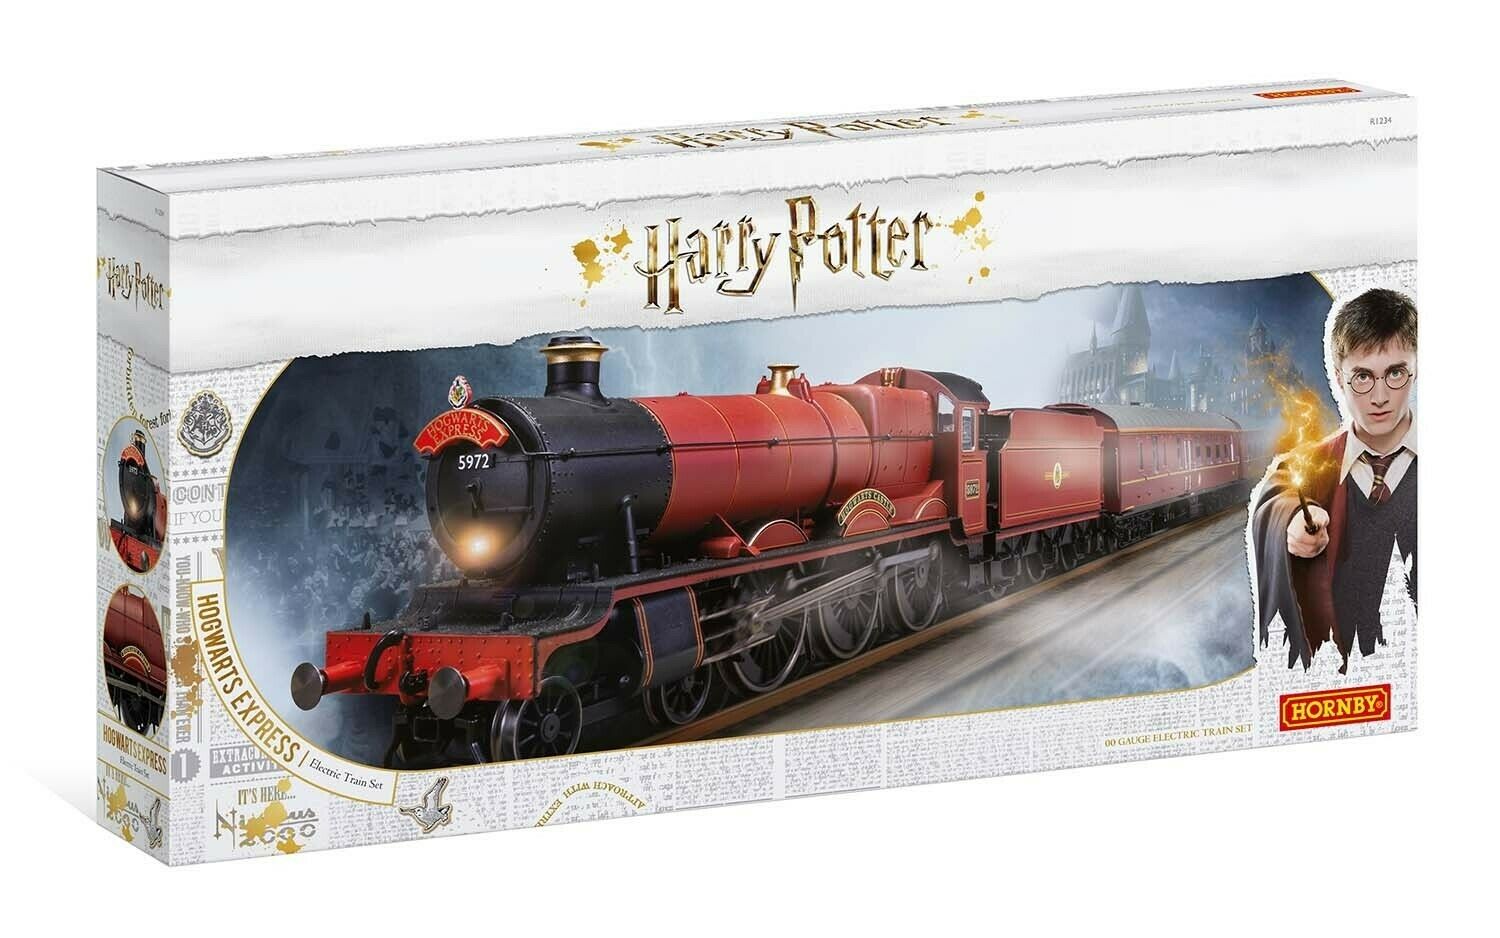 Hornby Harry Potter Hogwart's Express "oo" Train Set R1234m